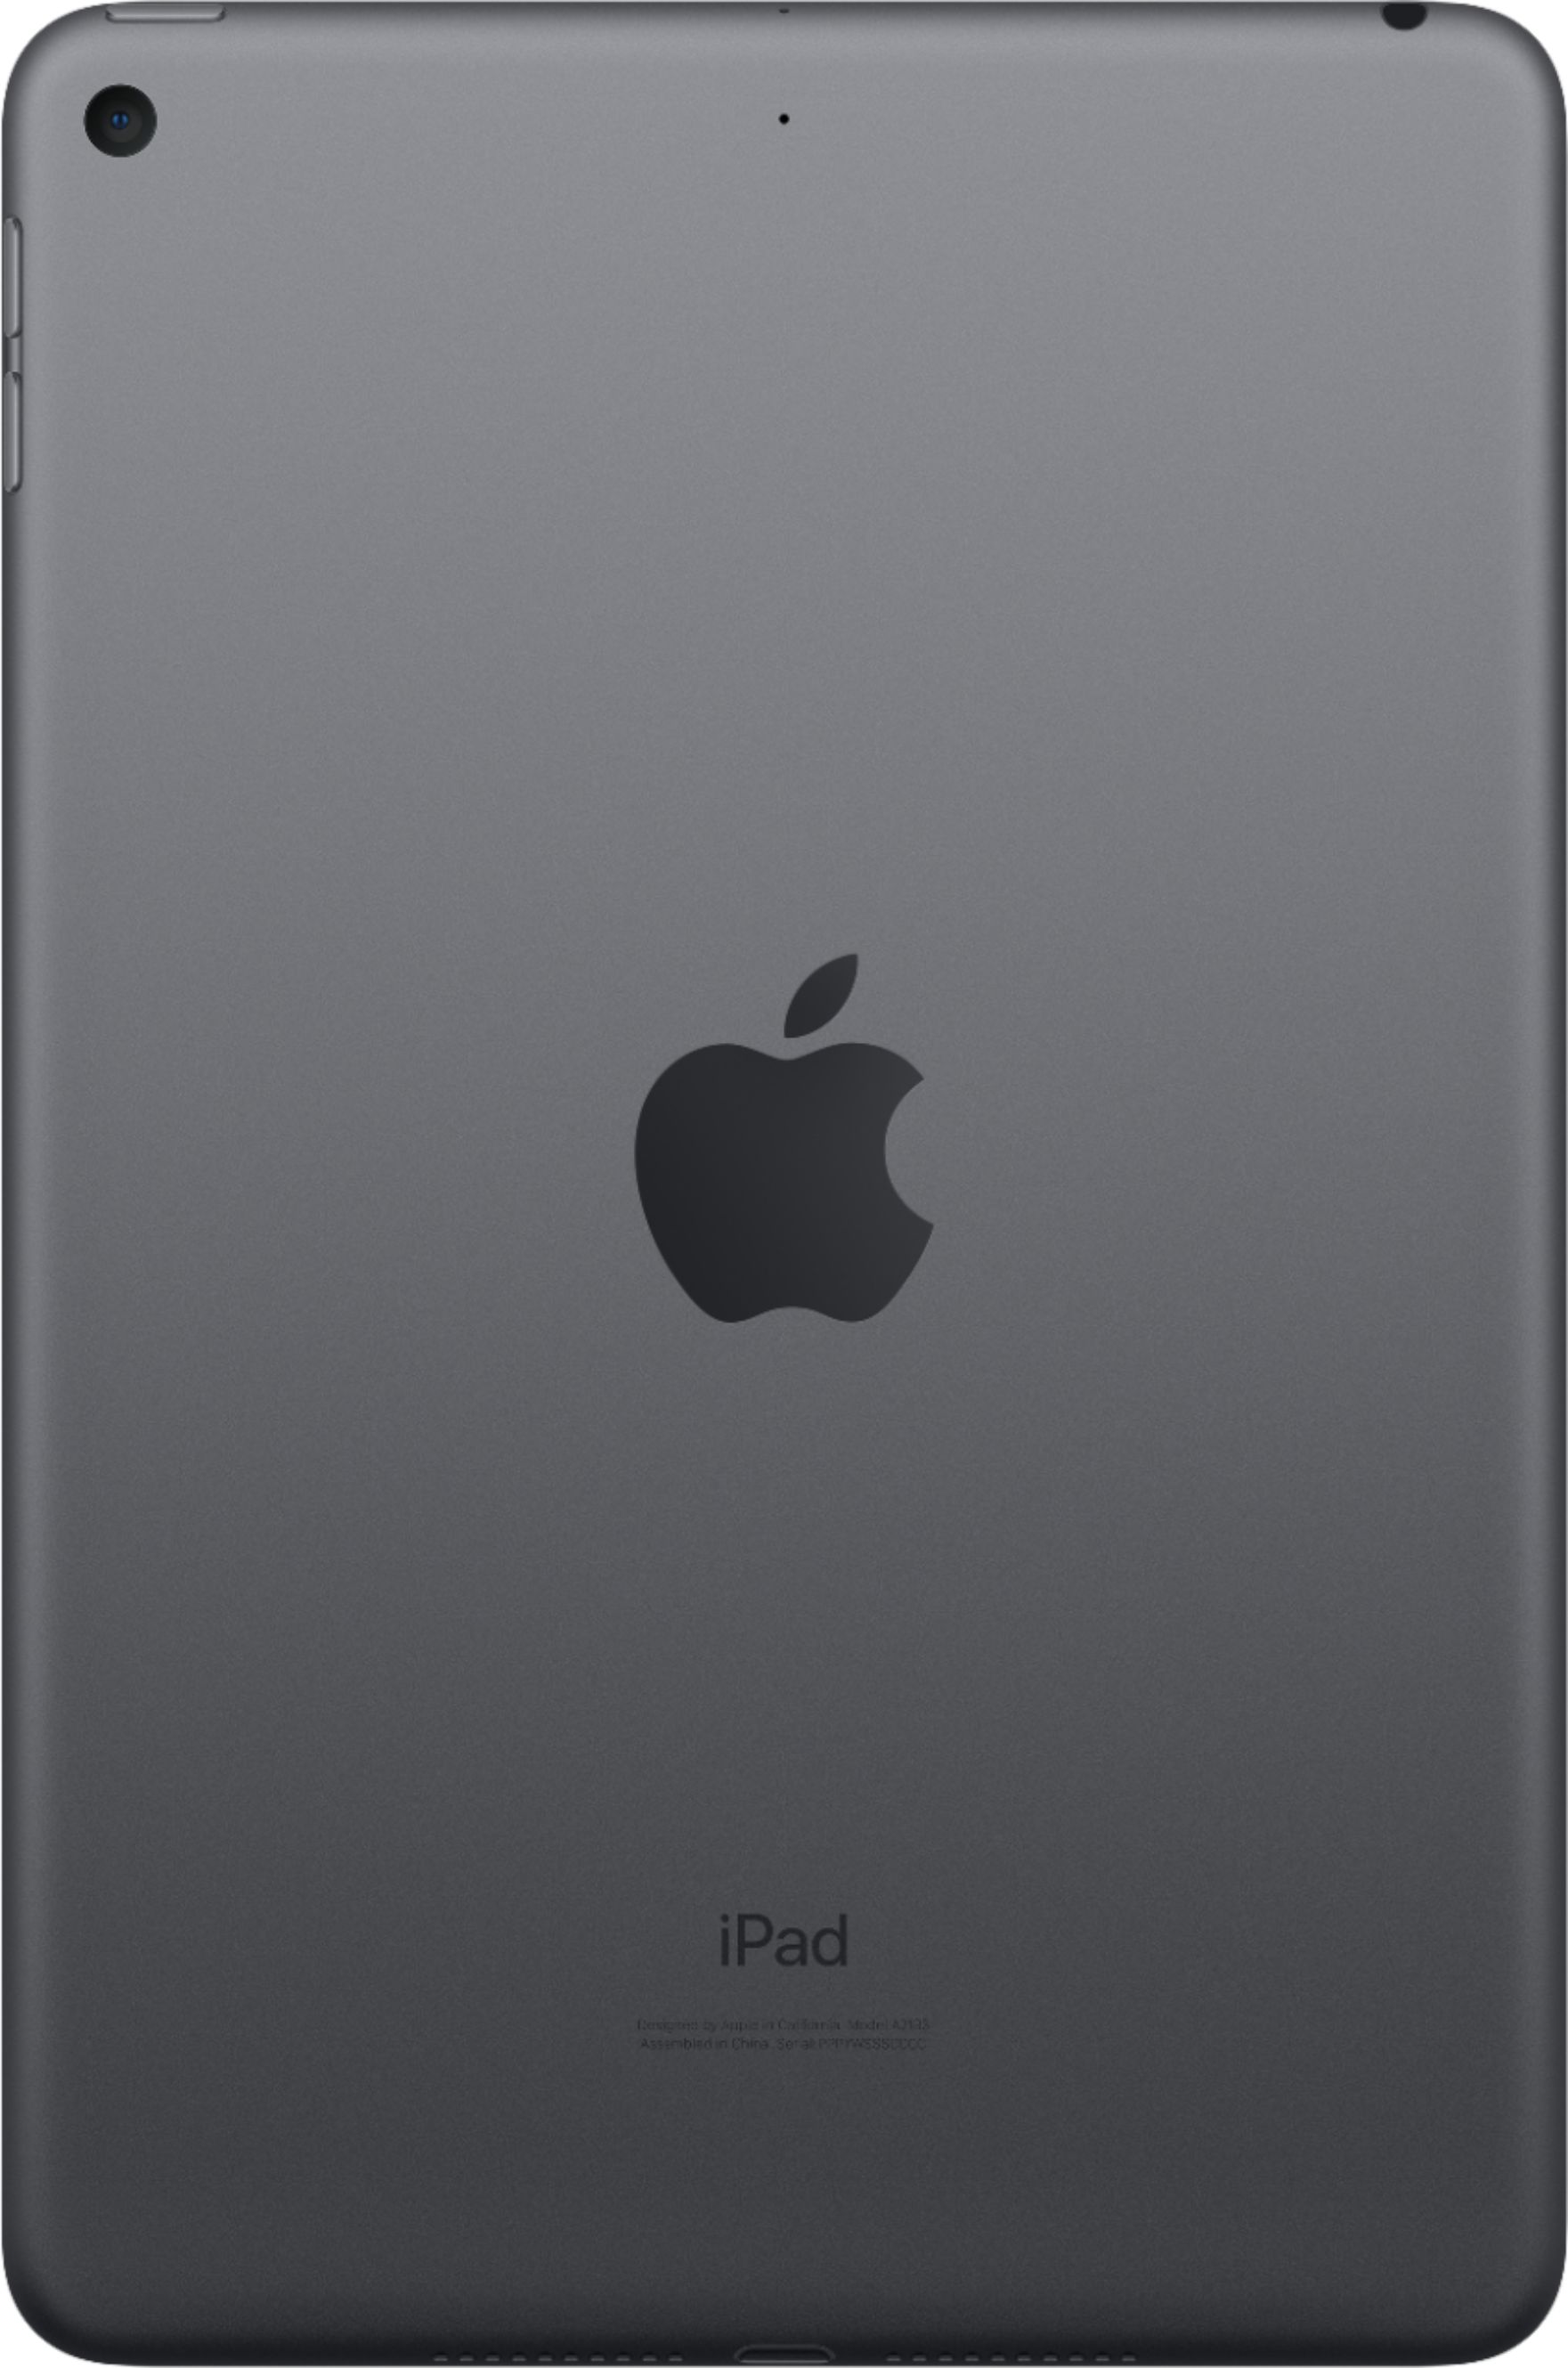 Apple Geek Squad Certified Refurbished 7.9-Inch iPad mini (5th Generation)  with Wi-Fi 64GB Space Gray GSRF MUQW2LL/A - Best Buy